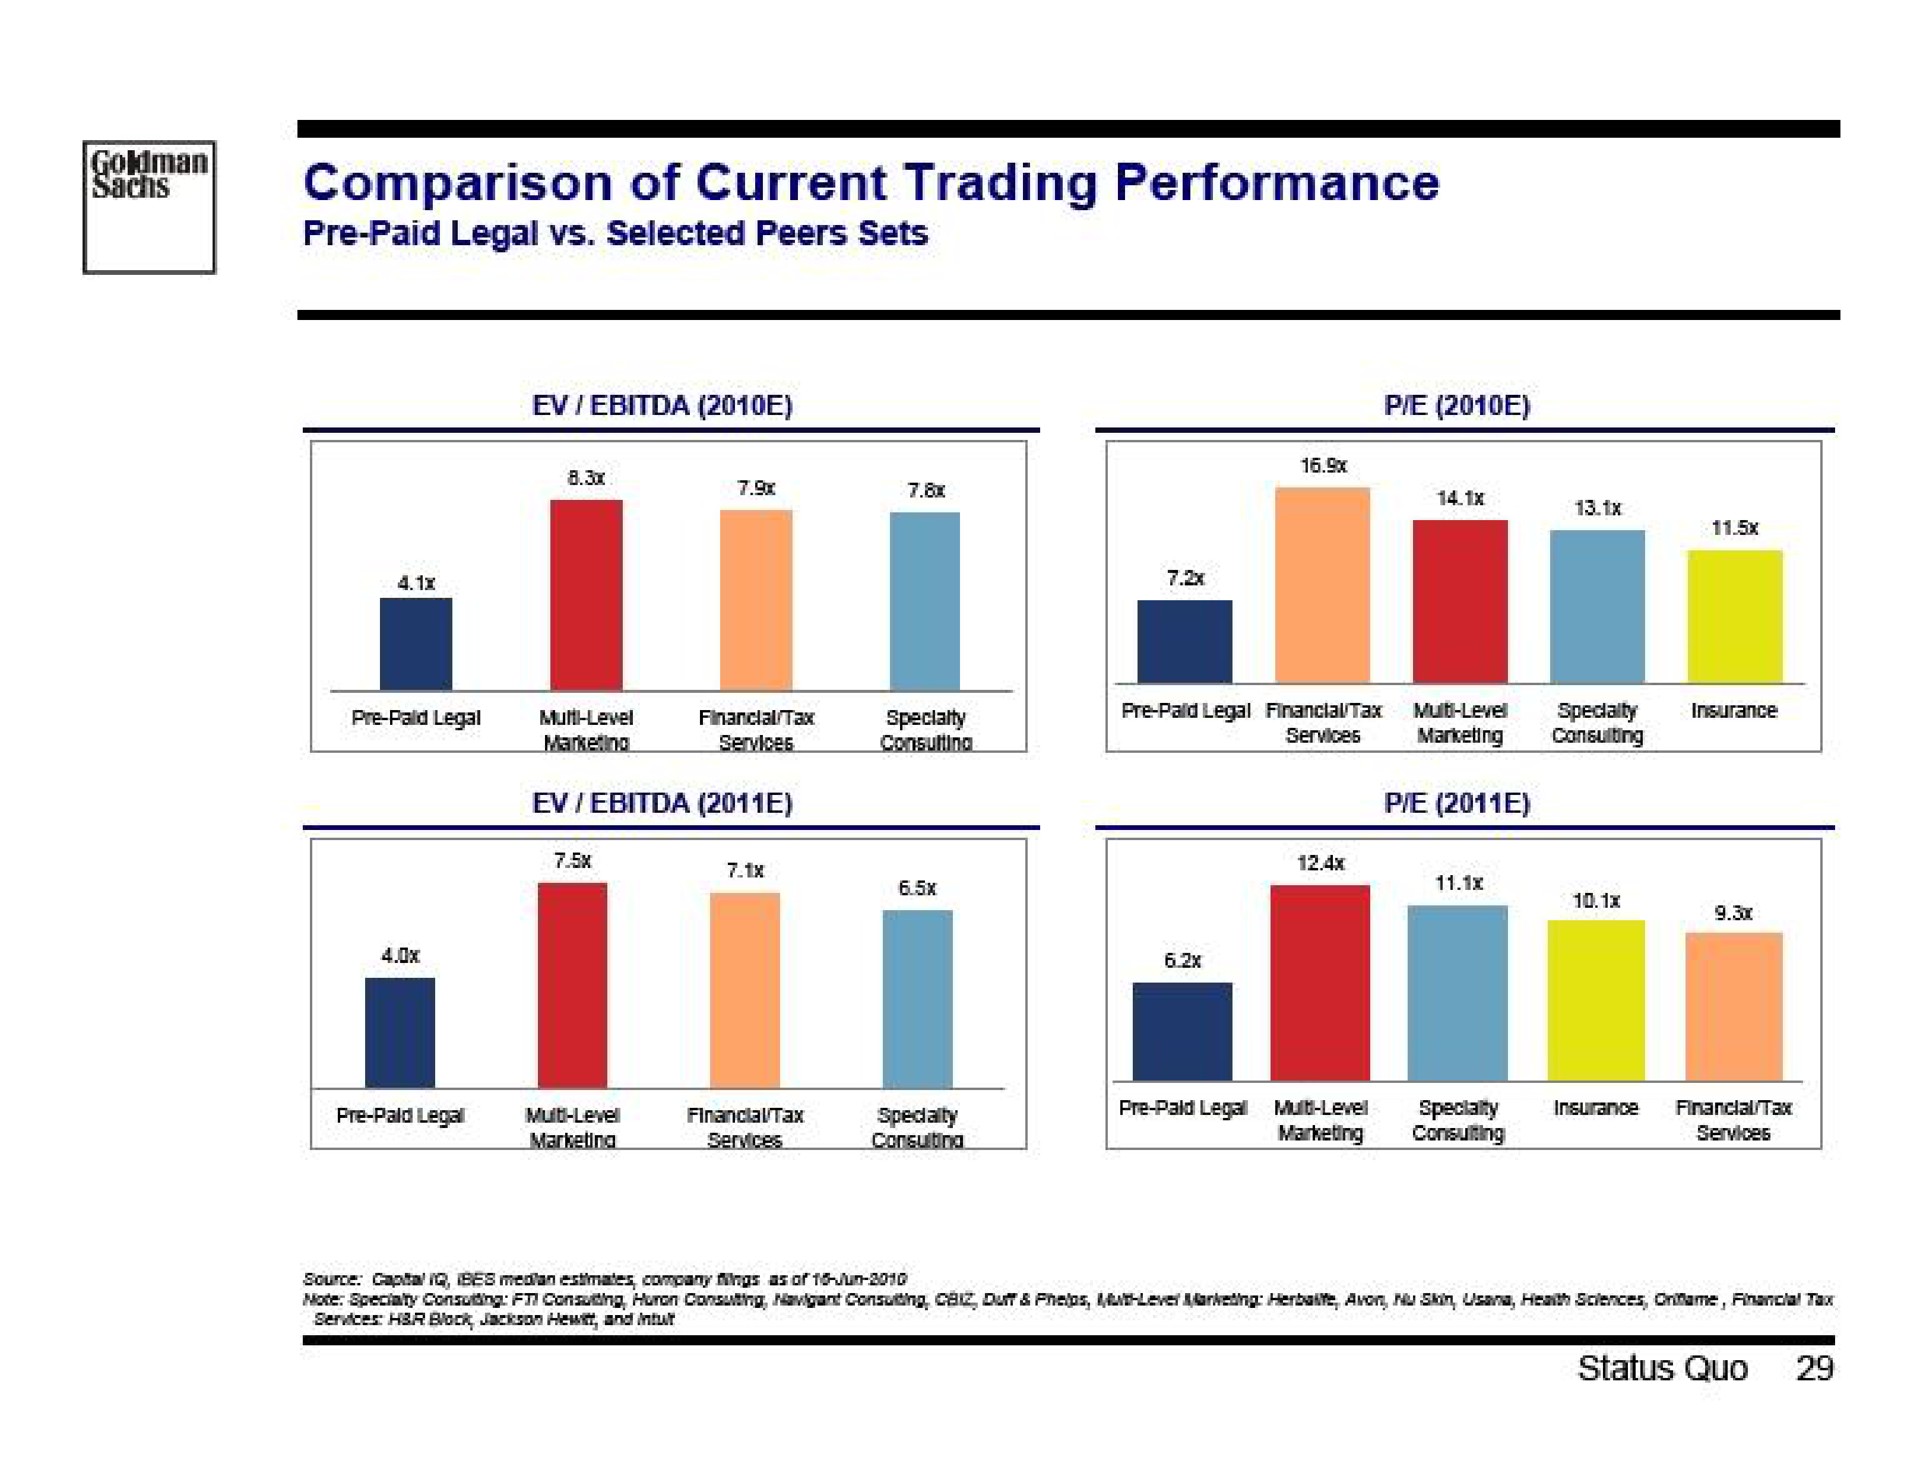 sas comparison of current trading performance | Goldman Sachs